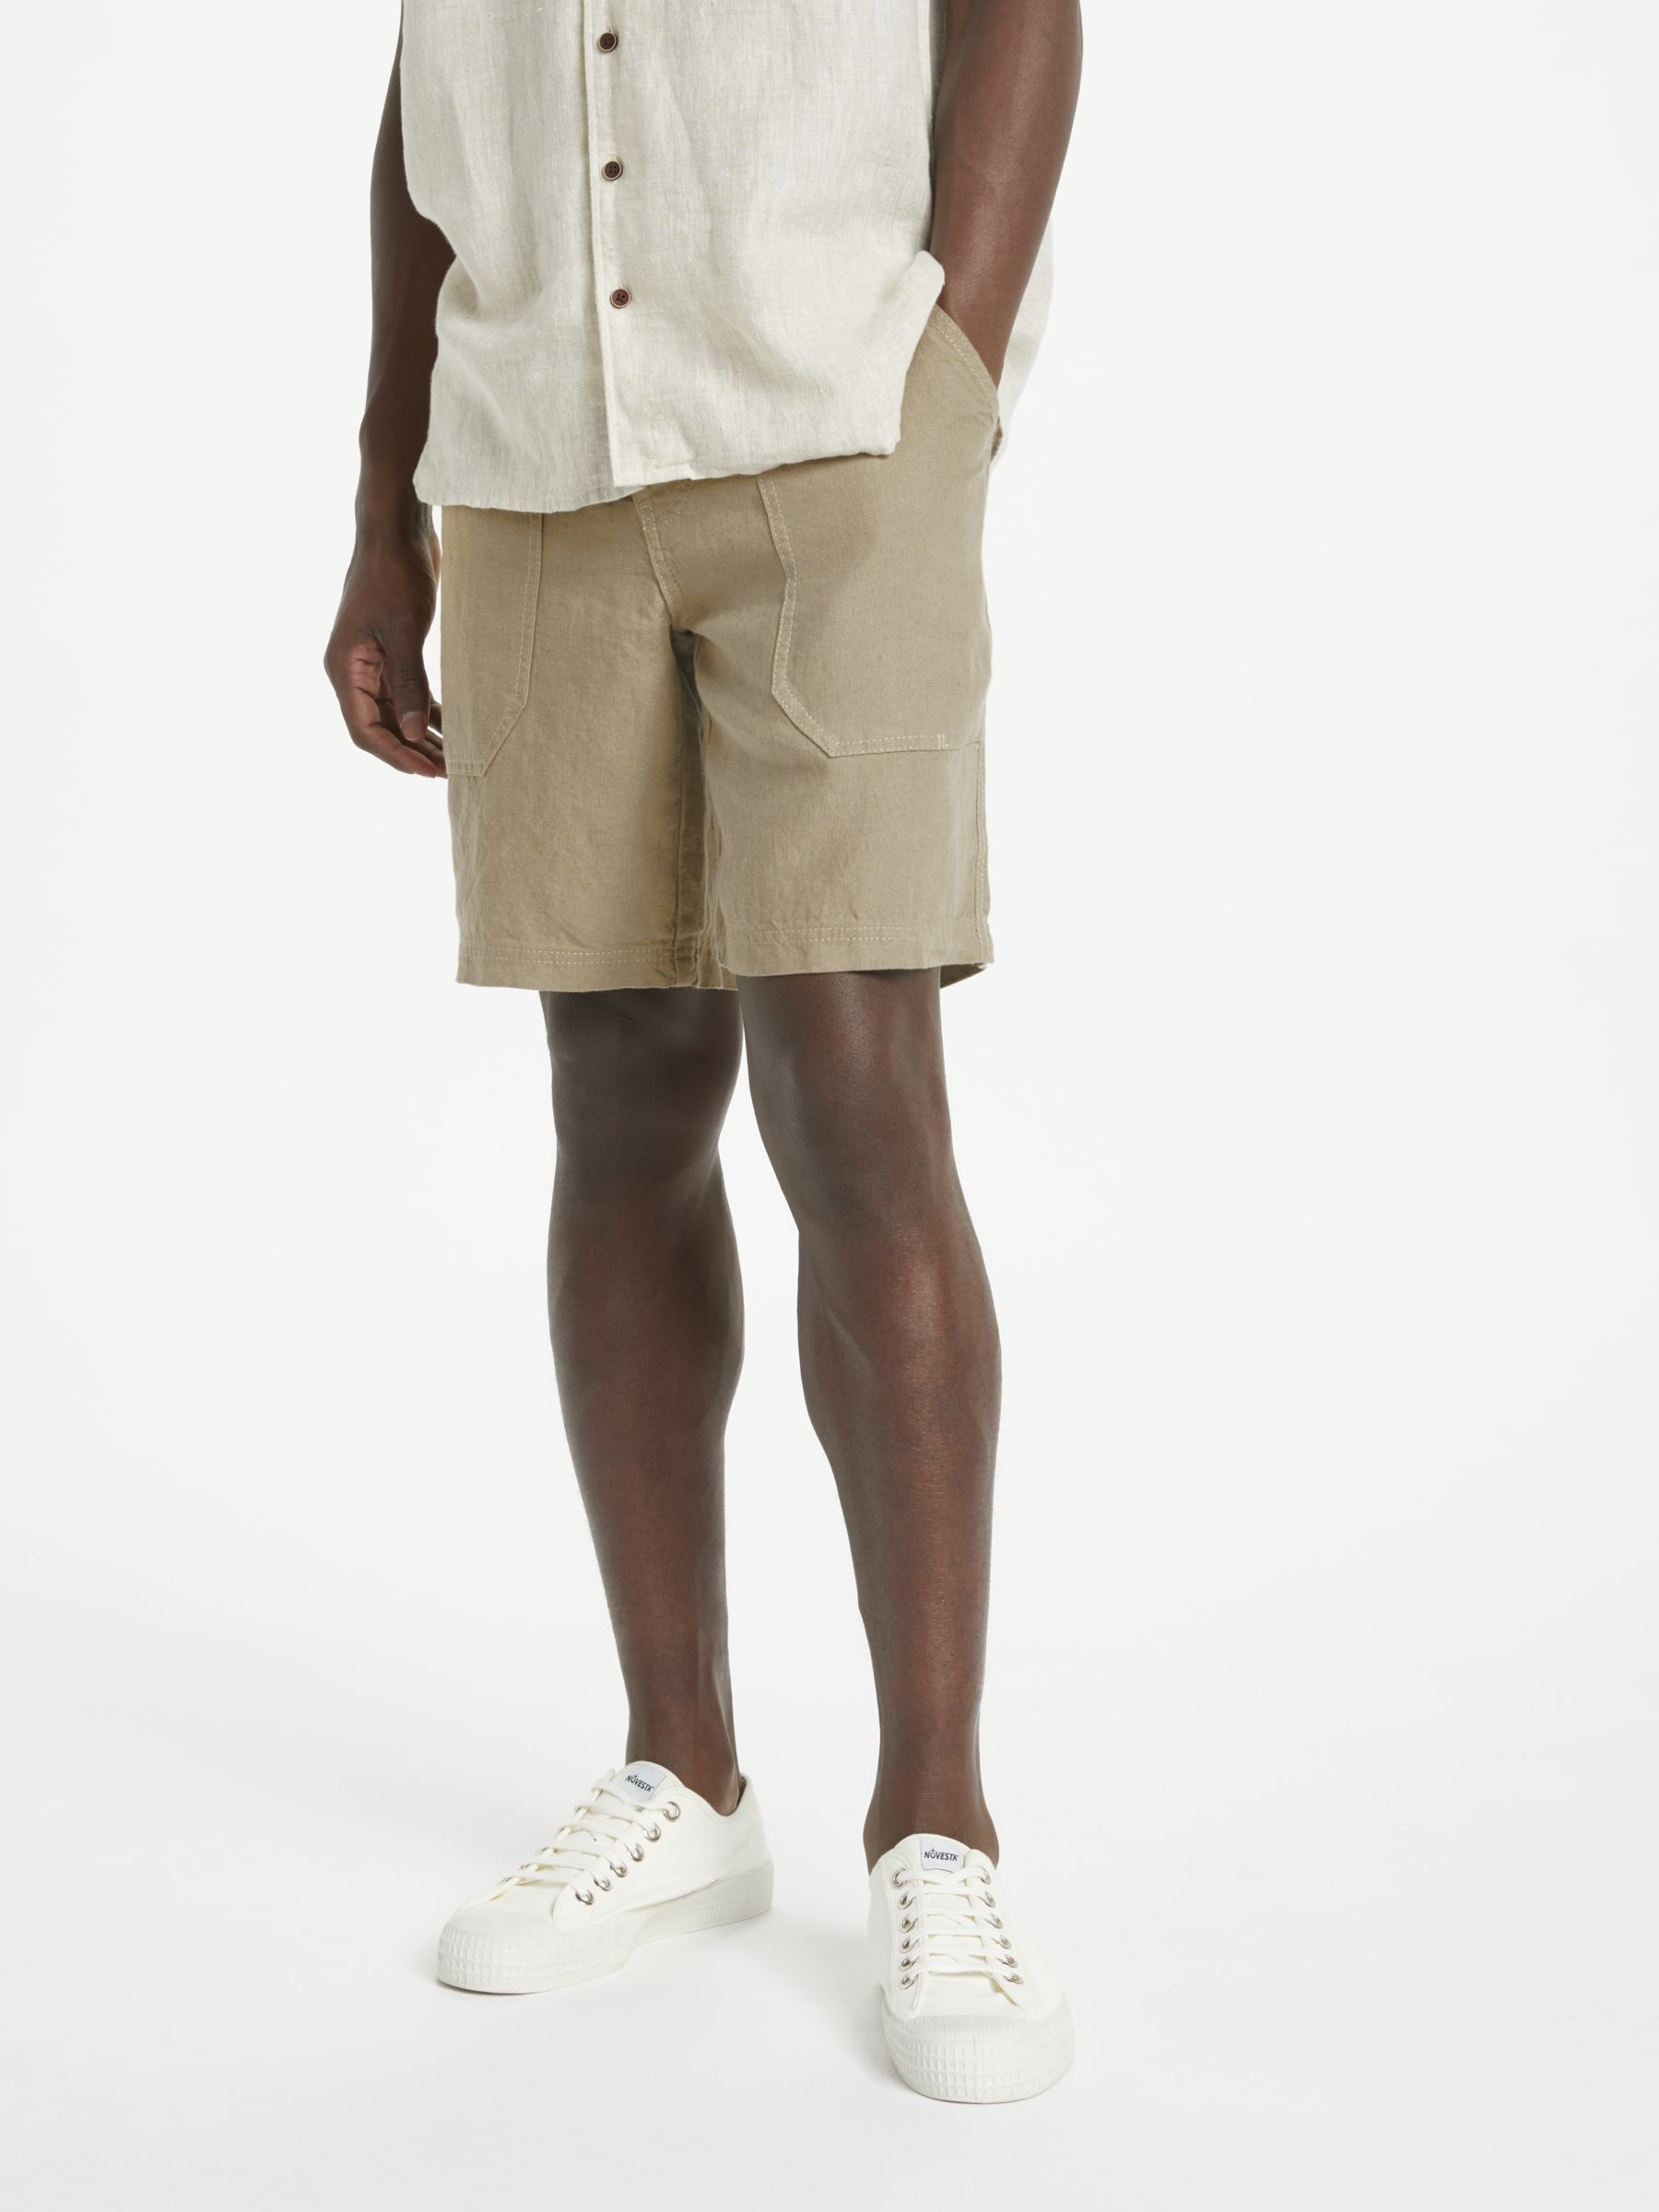 JOHN LEWIS & Co. Linen Shorts, Stone, 32R